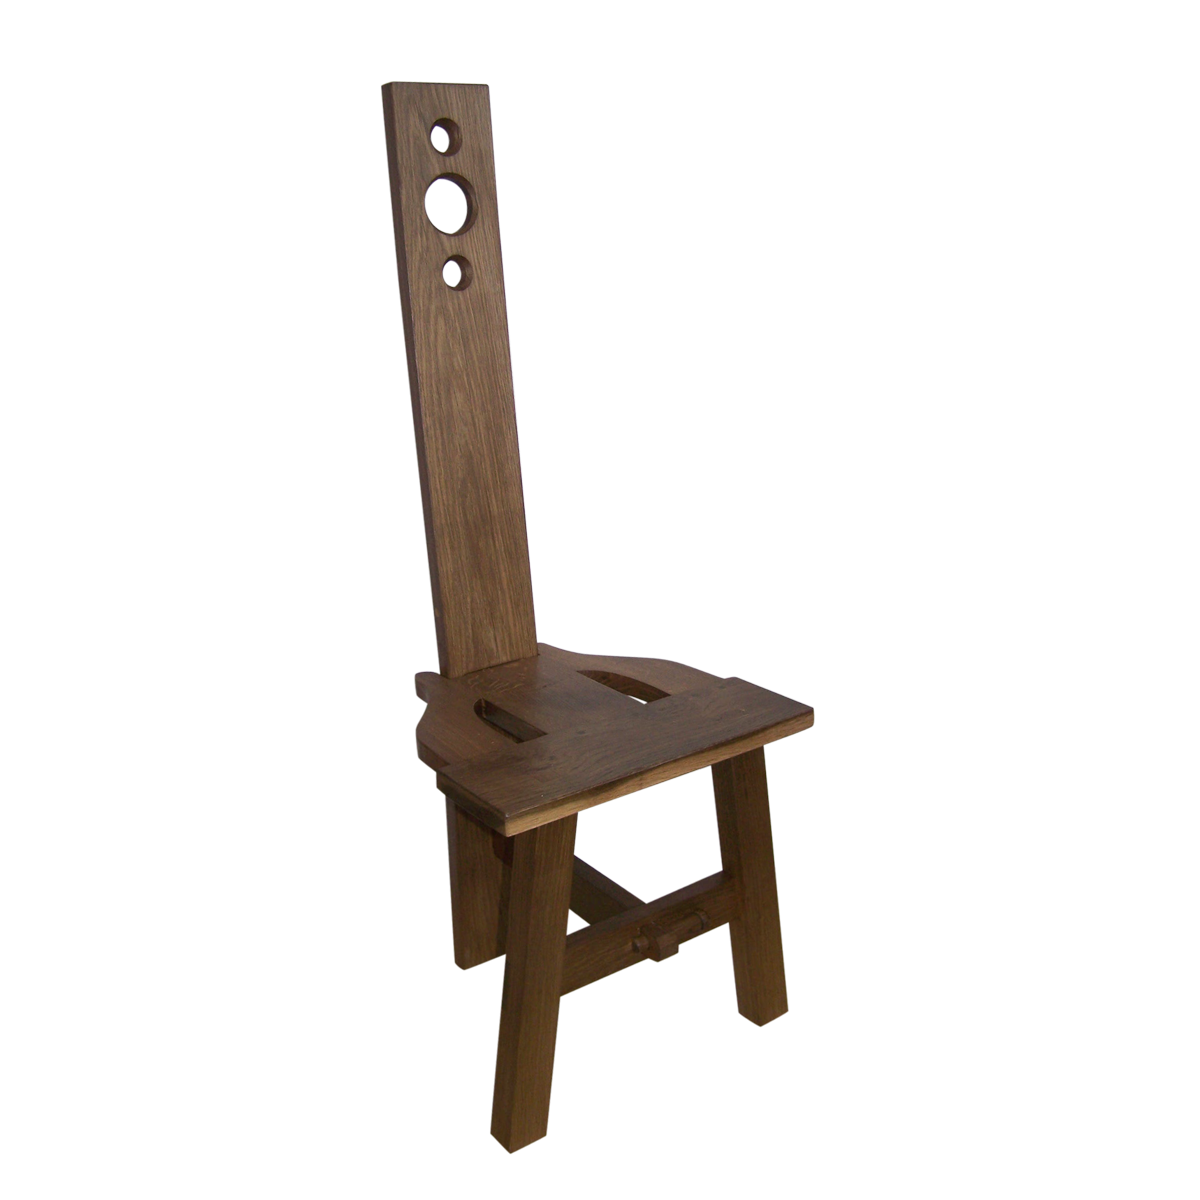 Foto di PNG della sedia del cureno